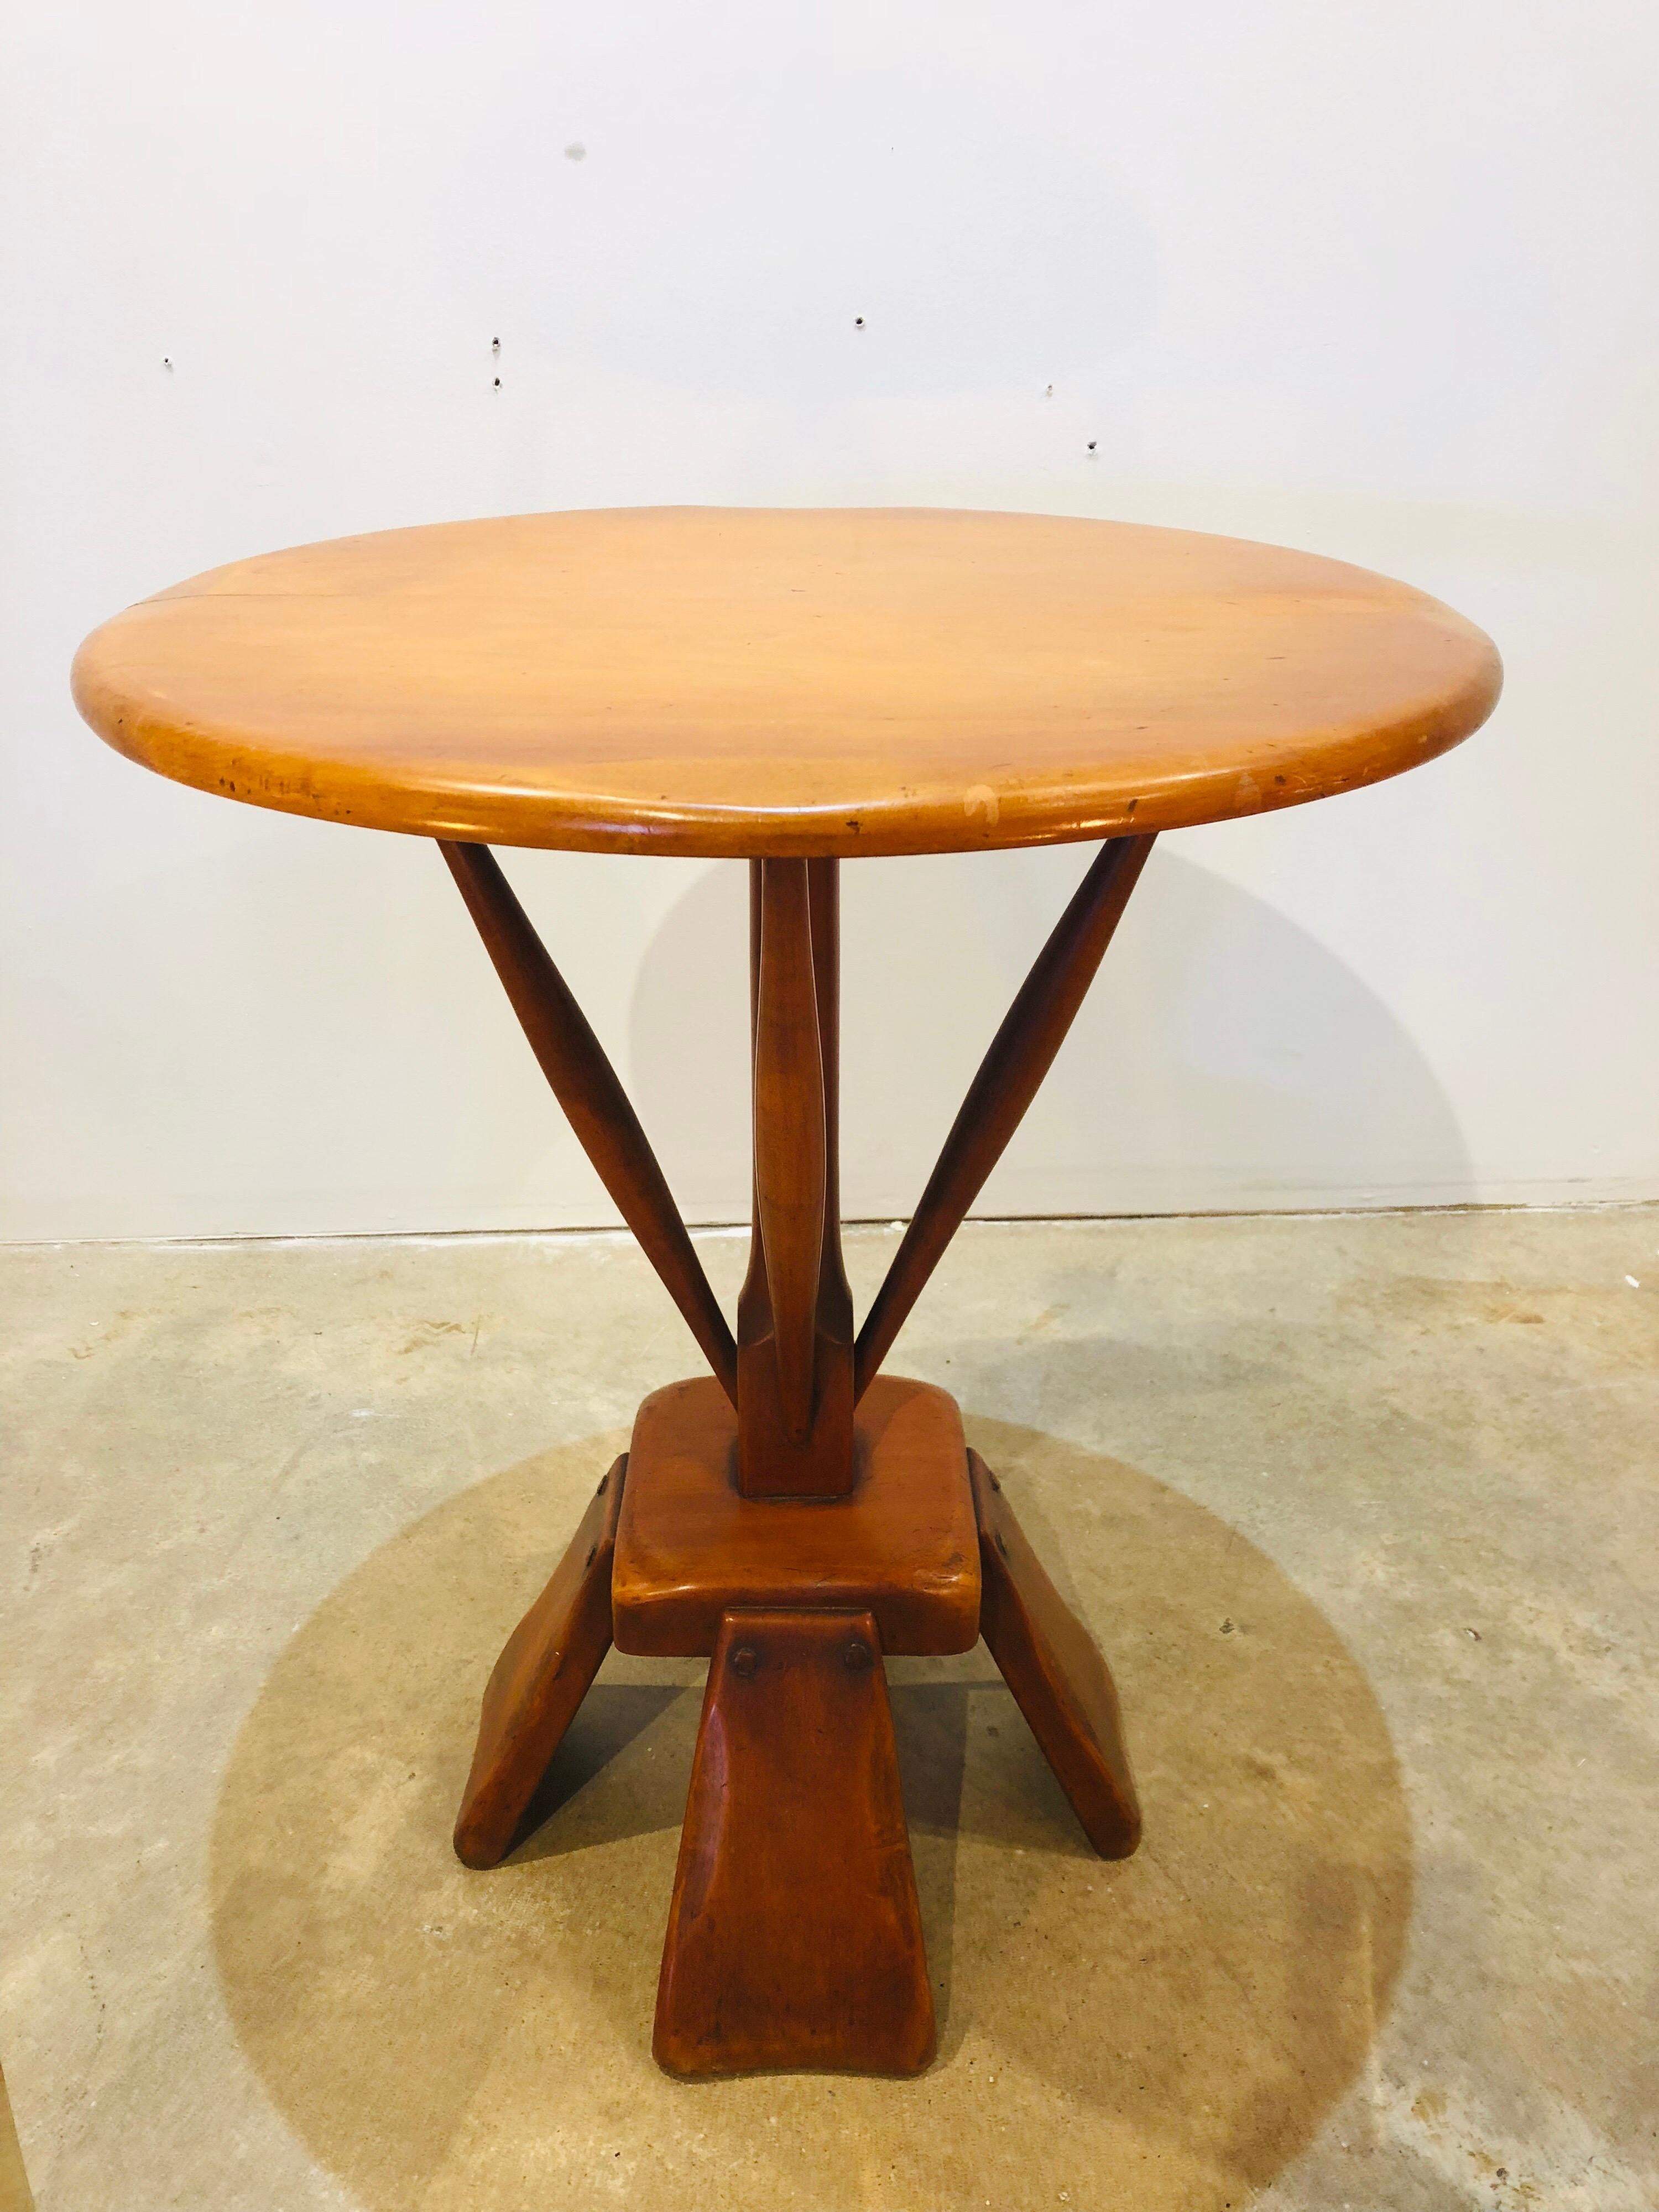 Stylish midcentury accent wood table.